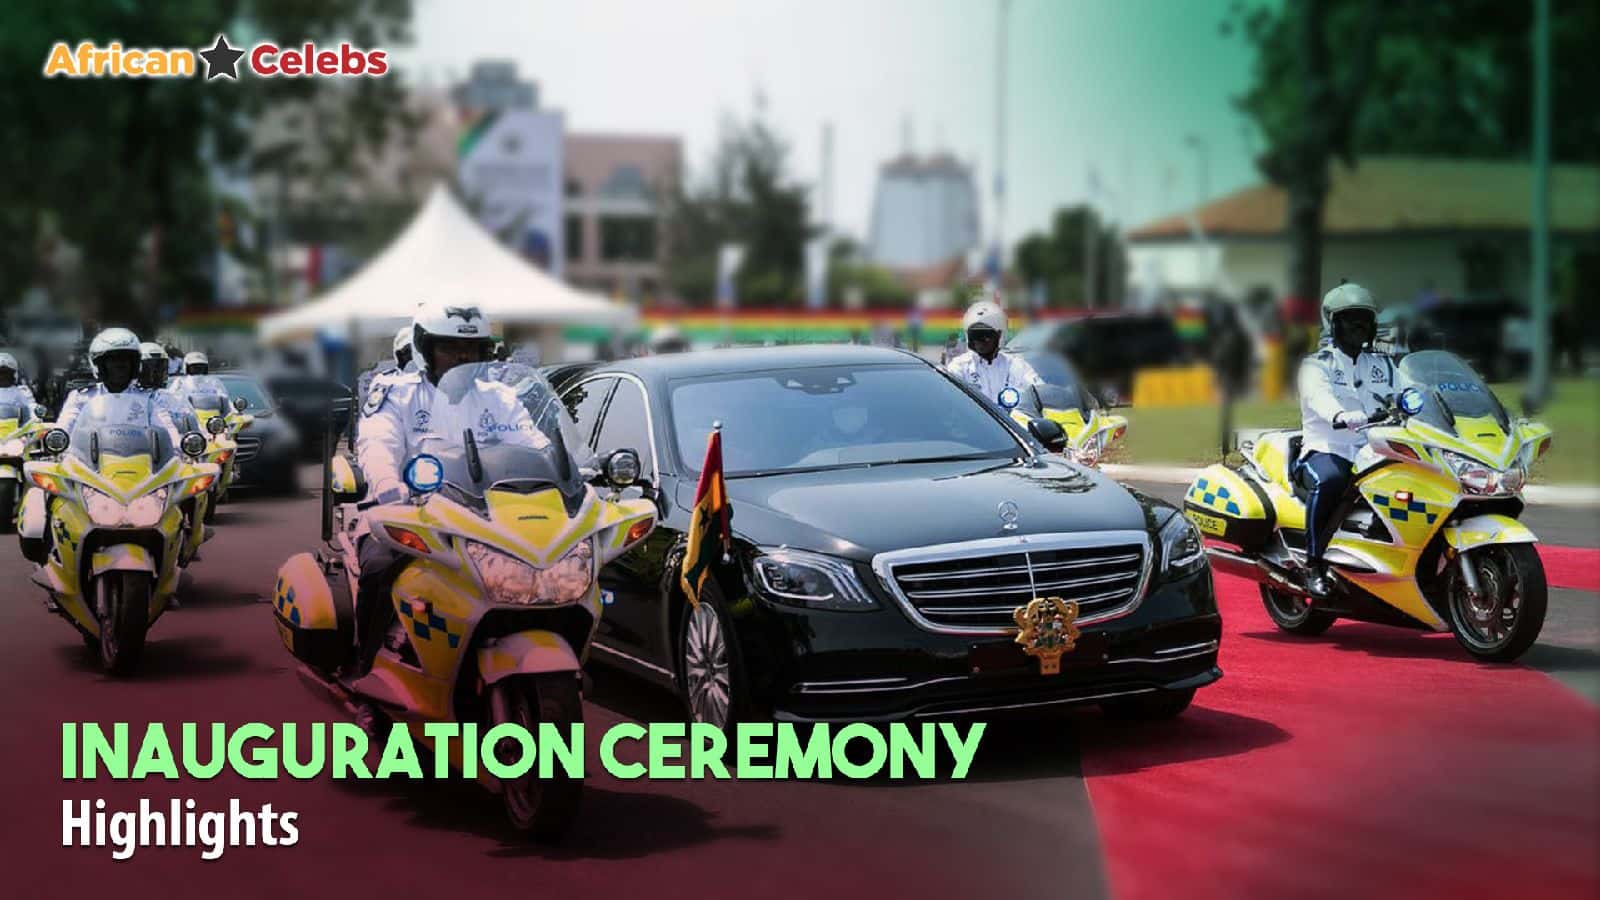 African Celebs Nana Akufo-Addo Inauguration Ceremony Highlights